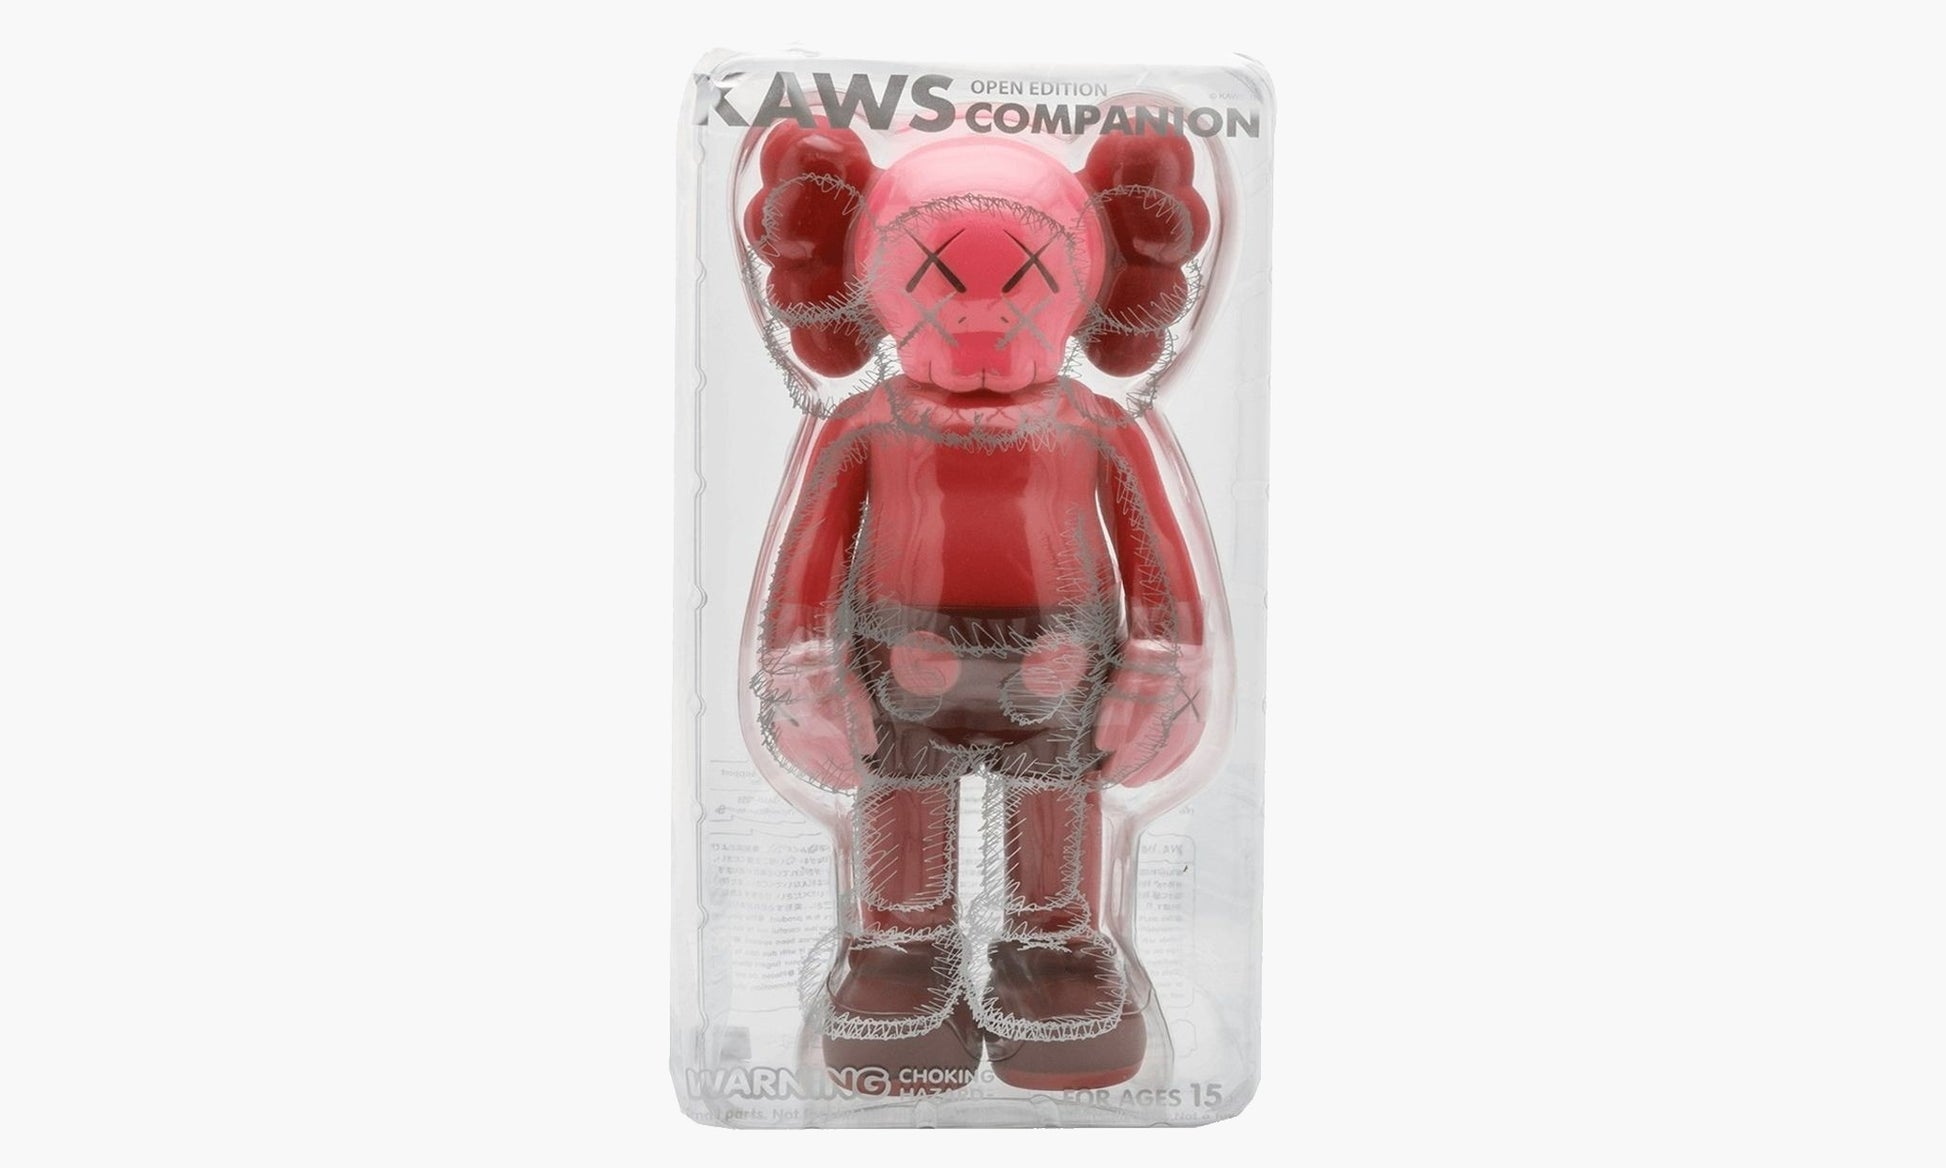 KAWS Companion Open Edition Vinyl Figure Blush | The Sortage